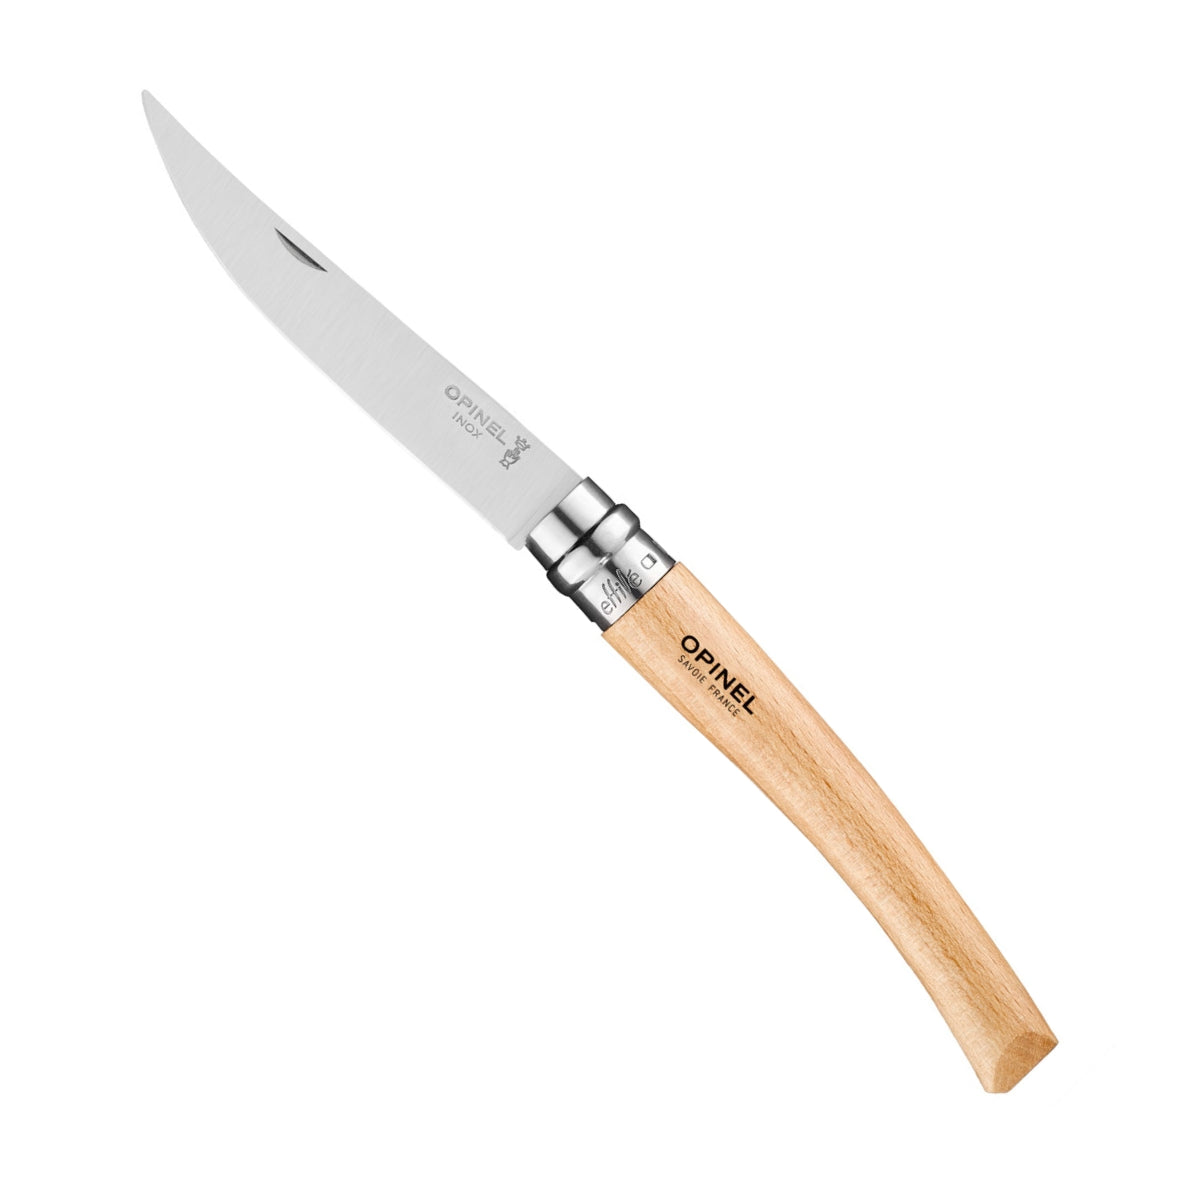 Multipurpose flex knife with stainless steel blade - Harvesting knives -  N001037 - Terrateck